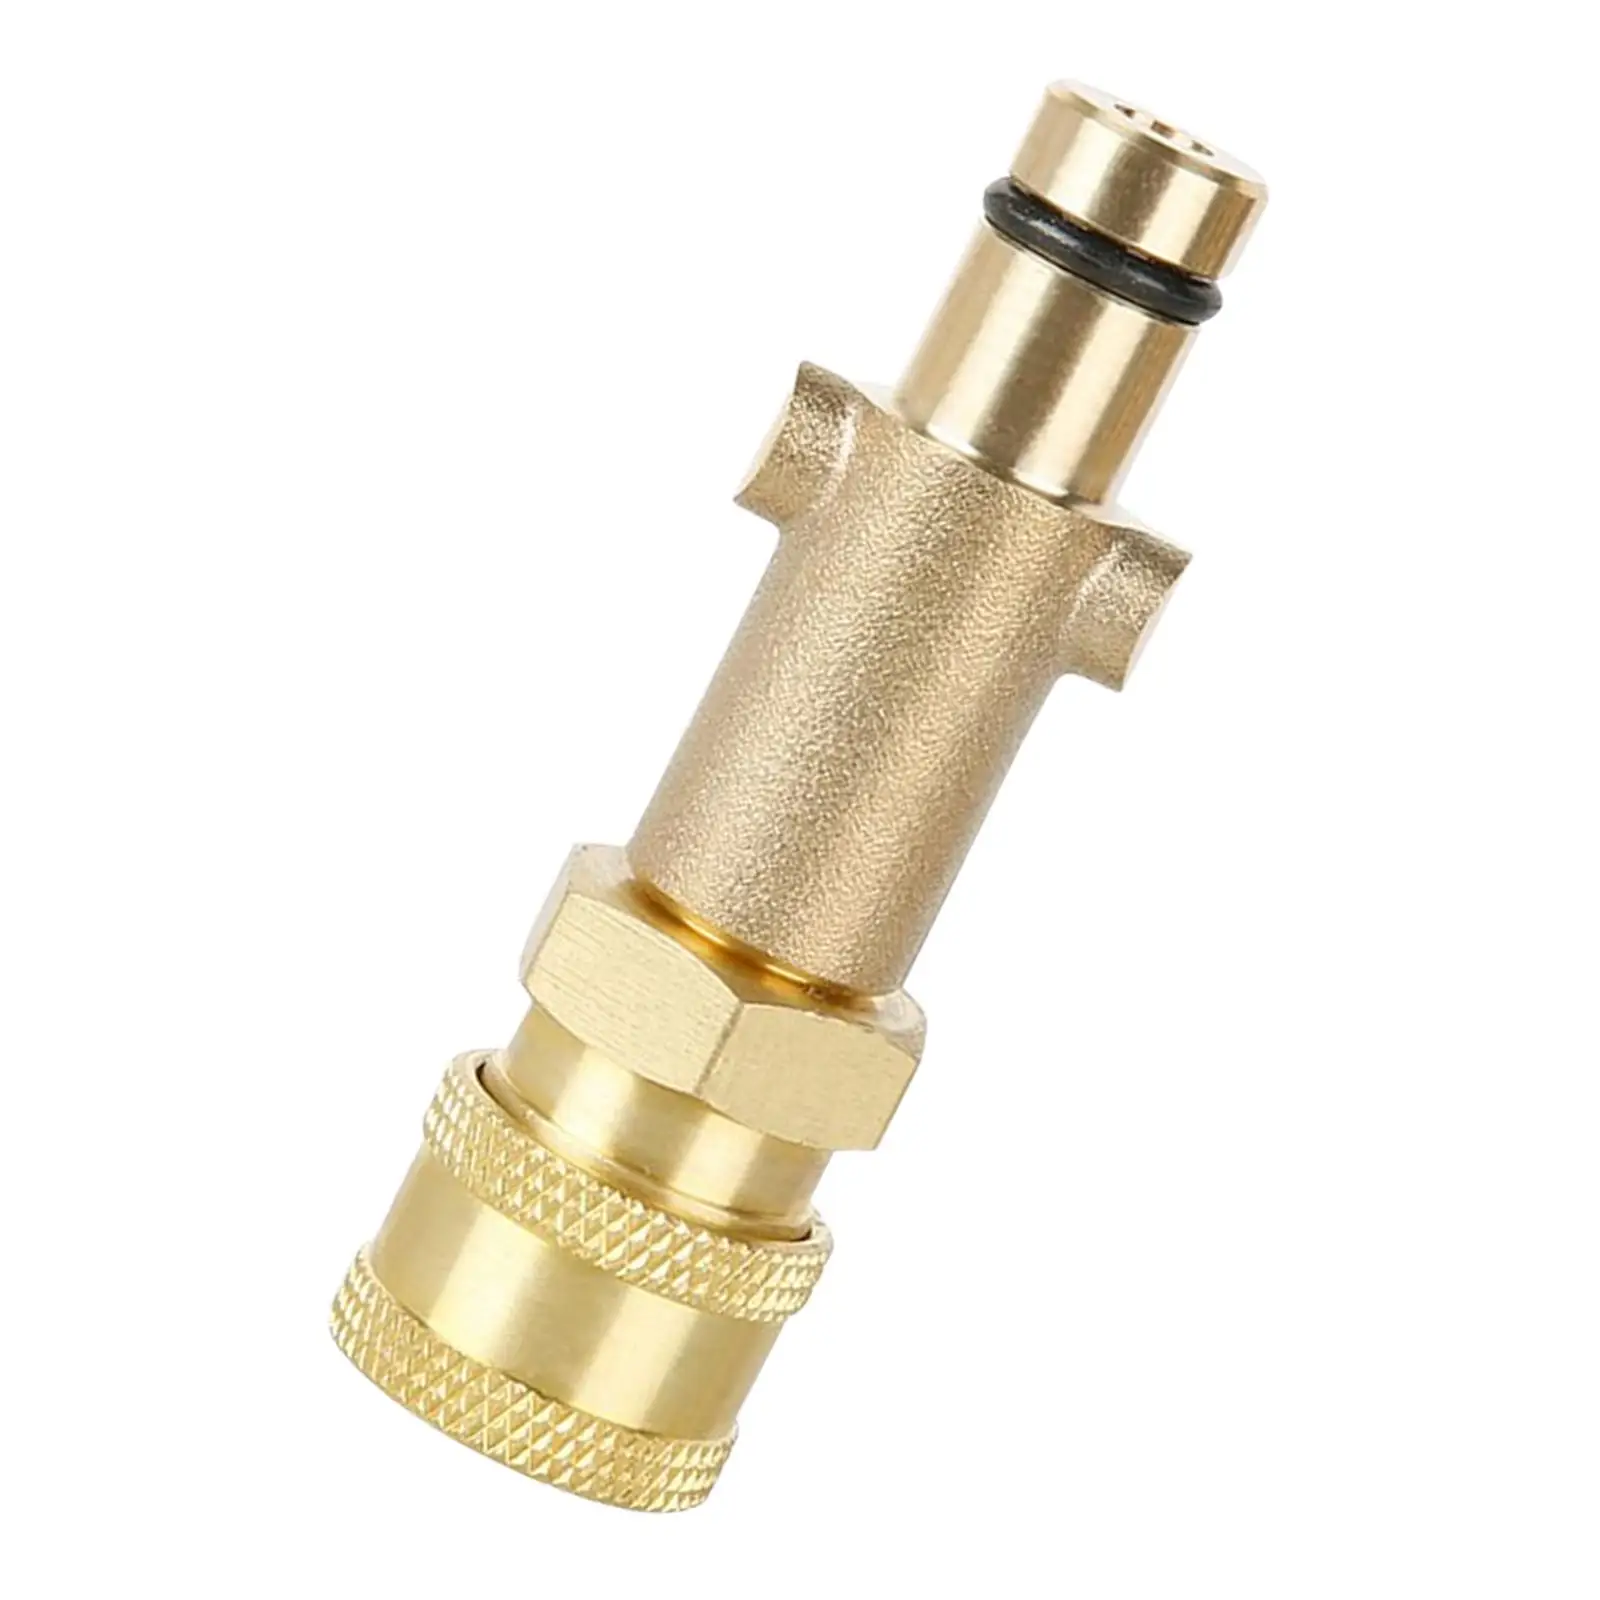 Brass Pressure Washer Quick Connector Adapter for Stihle RE98 Machine Clean - купить по выгодной цене |